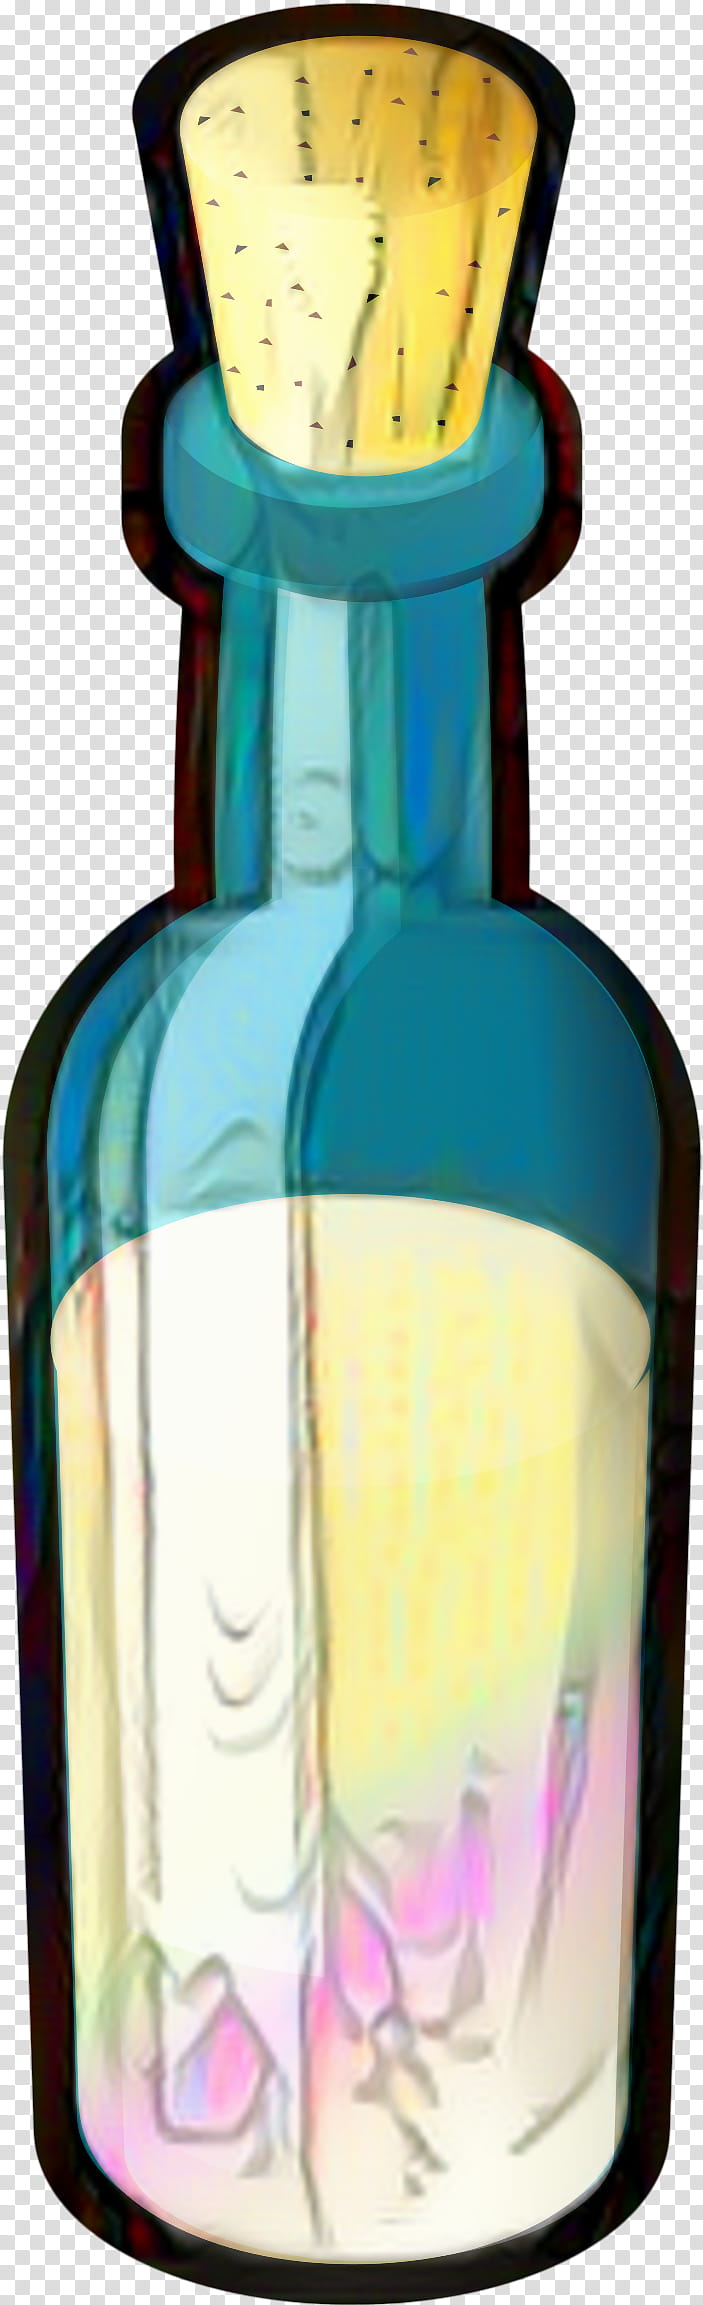 Beer, Glass Bottle, Cork, Computer, Water Bottles, Corkscrew, Bung, Cartoon transparent background PNG clipart